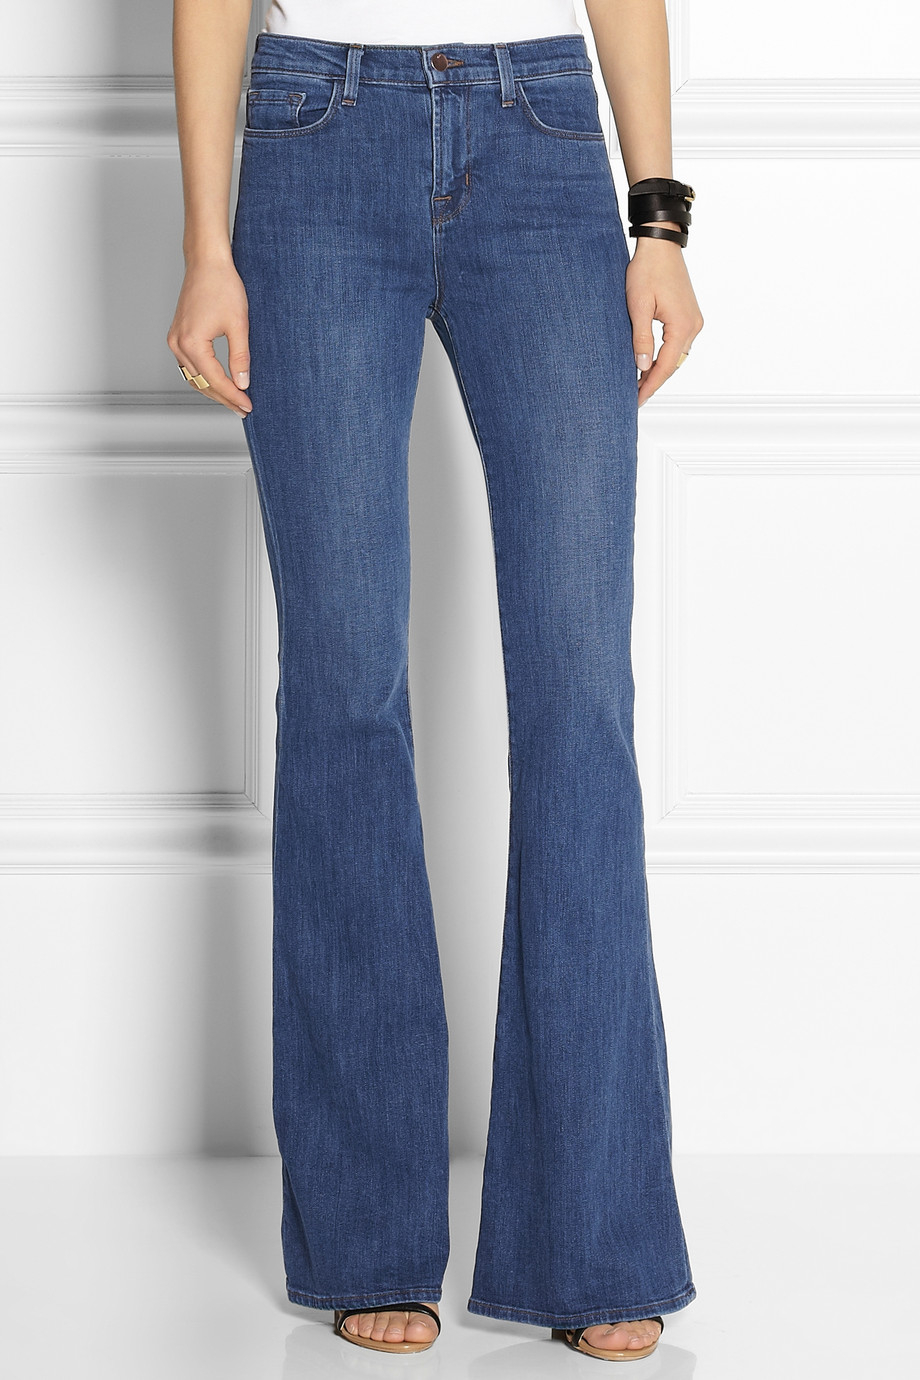 Lyst - J brand Valentina High-Rise Flared Jeans in Blue